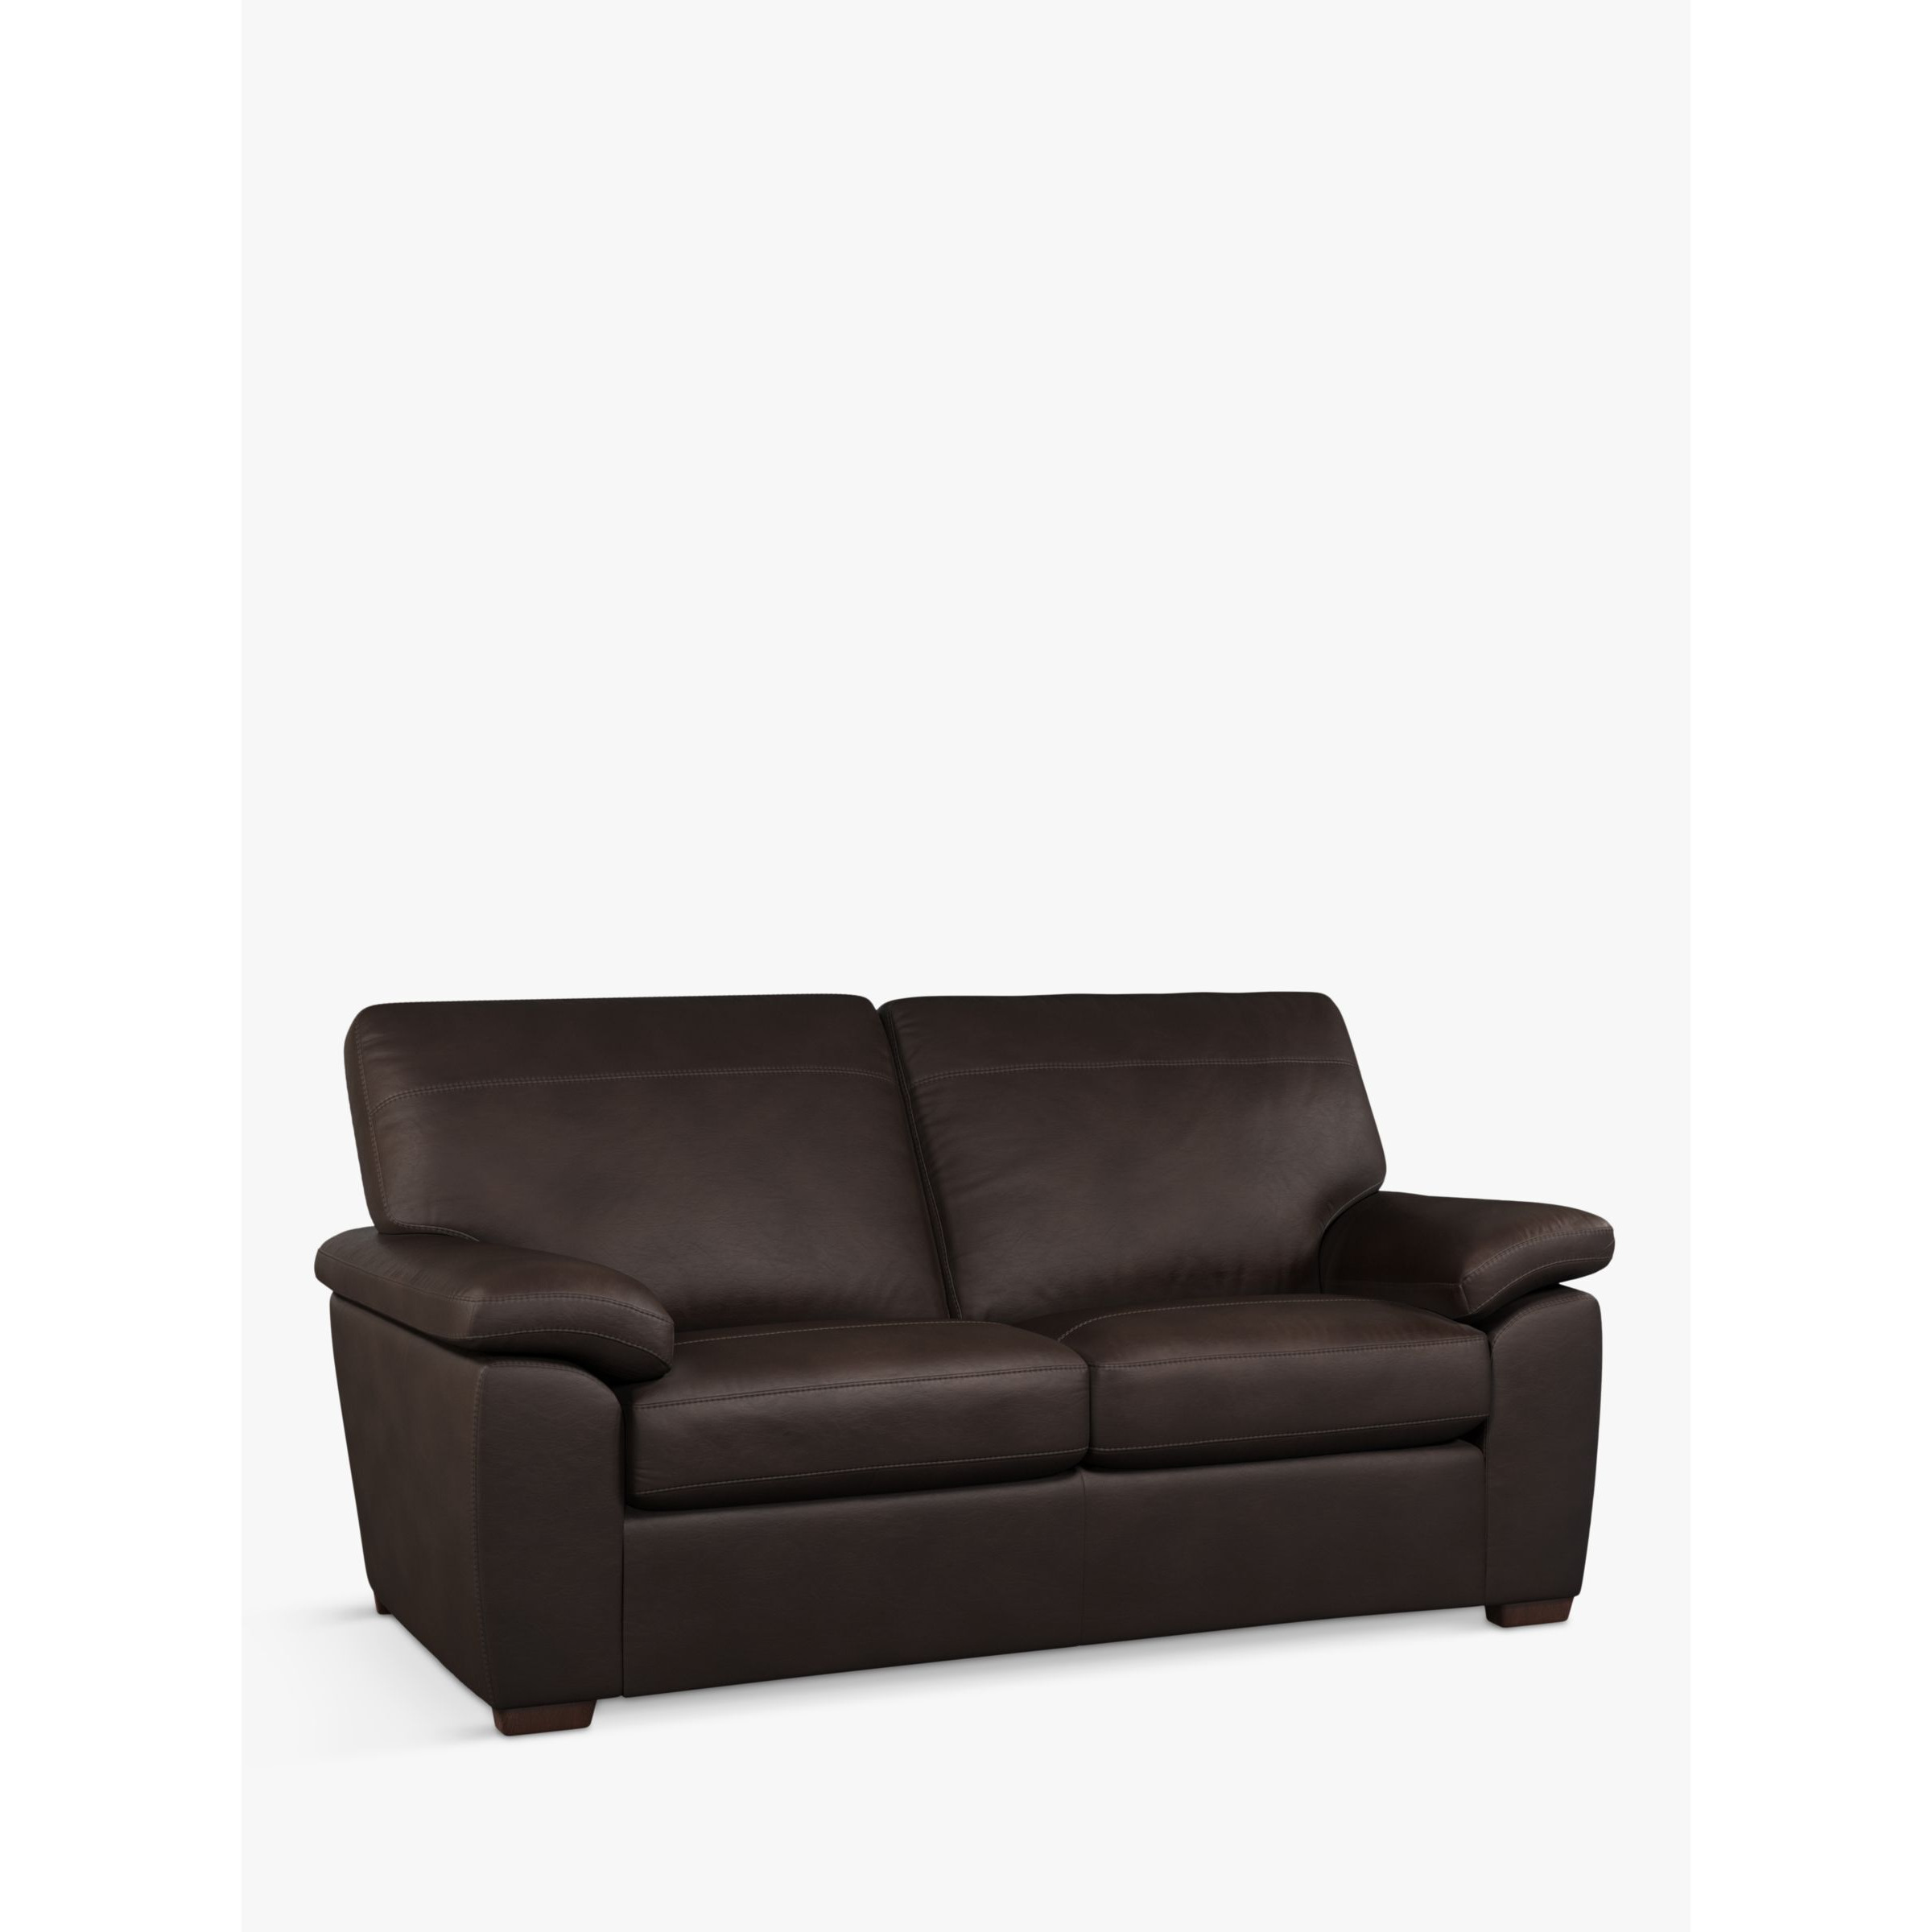 John Lewis Camden Medium 2 Seater Leather Sofa Bed, Dark Leg - image 1